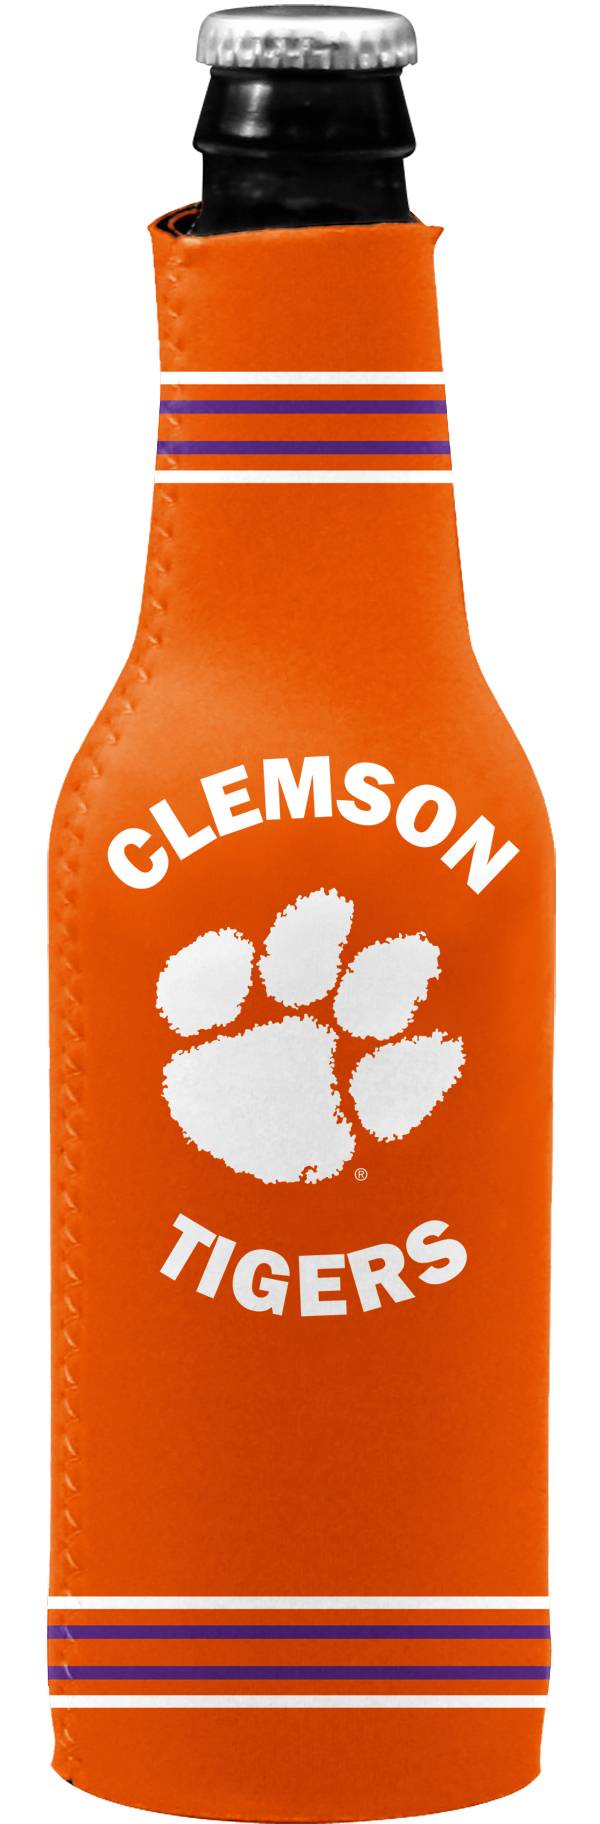 Clemson Tigers Bottle Koozie product image